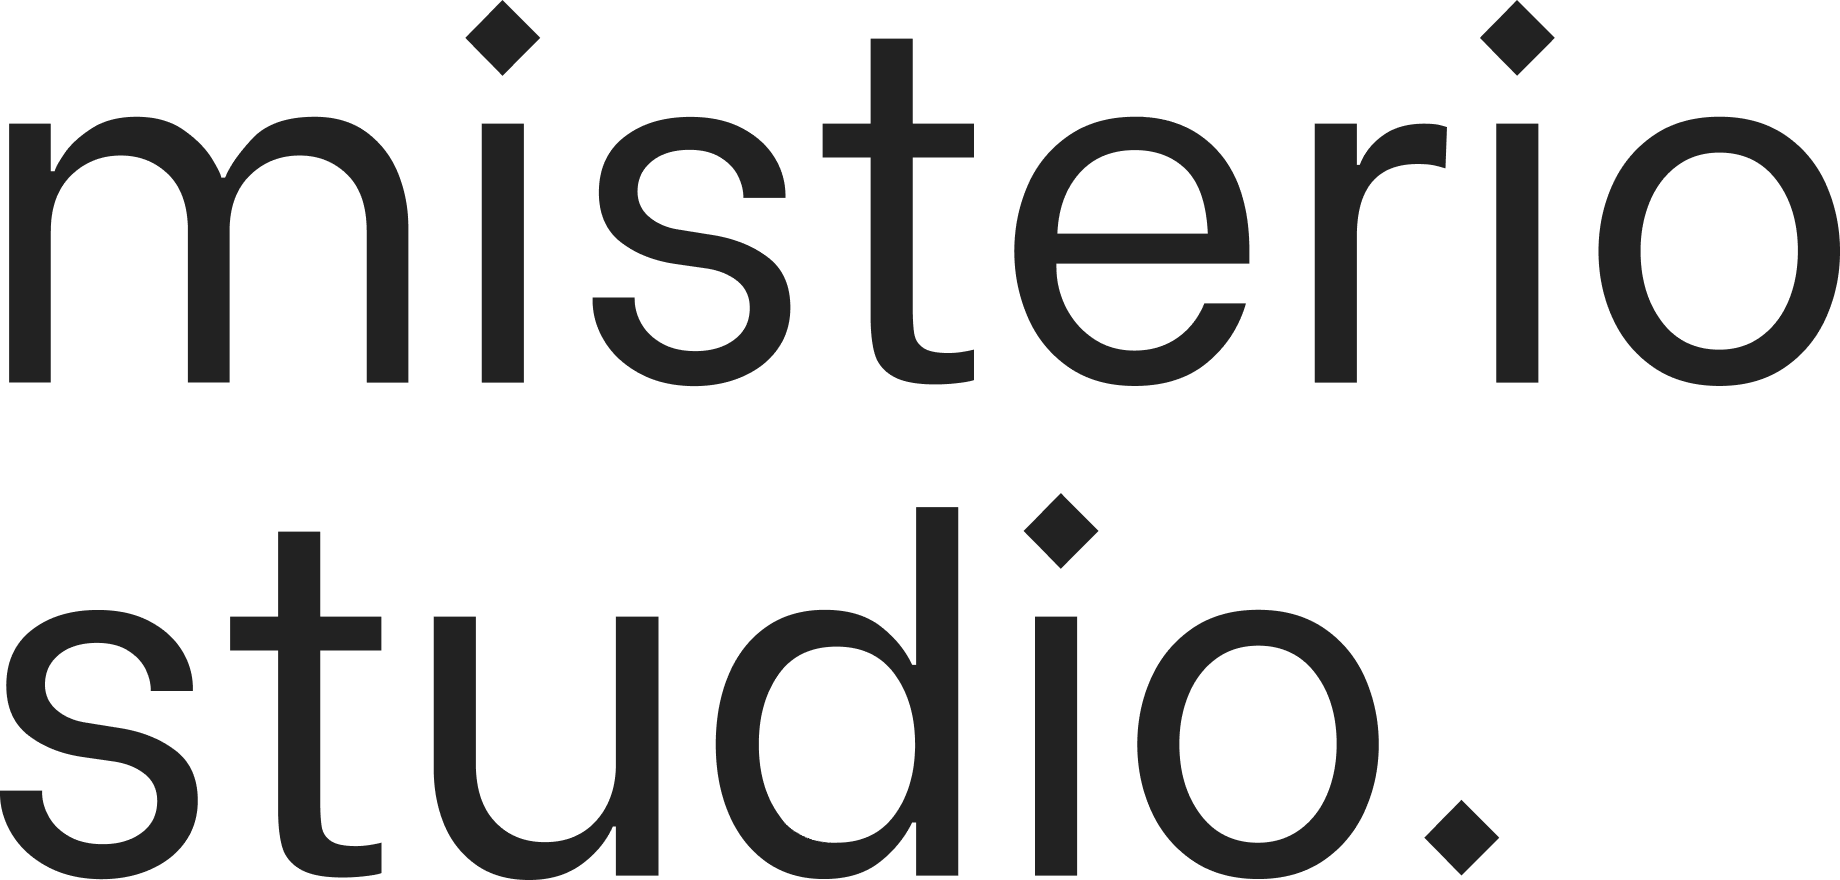 Misterio Studio